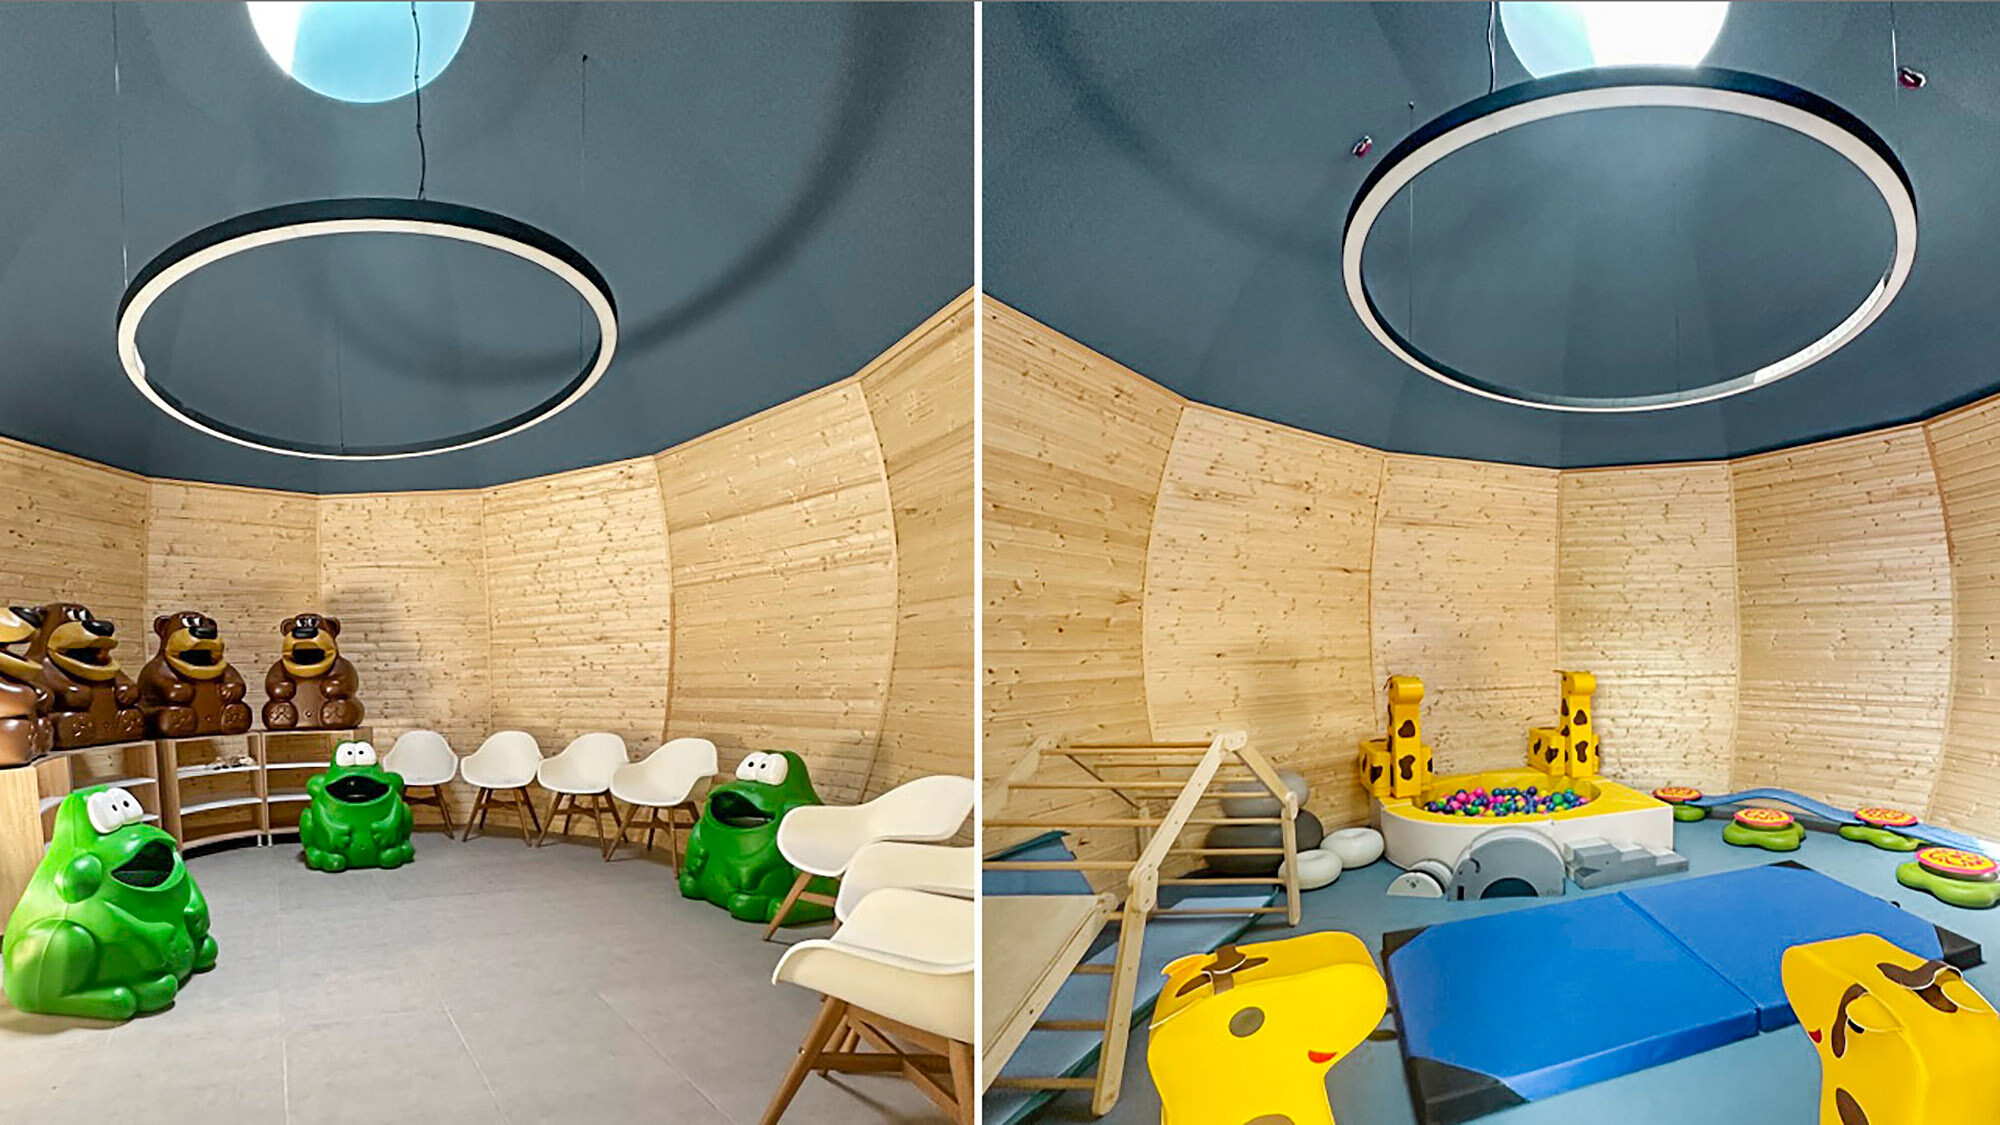 Dva pohledy do interiéru nové kupole: vlevo s hravým, veselým nábytkem a sedadly s úložnými prostory, vpravo s gymnastickým náčiním a hračkami.